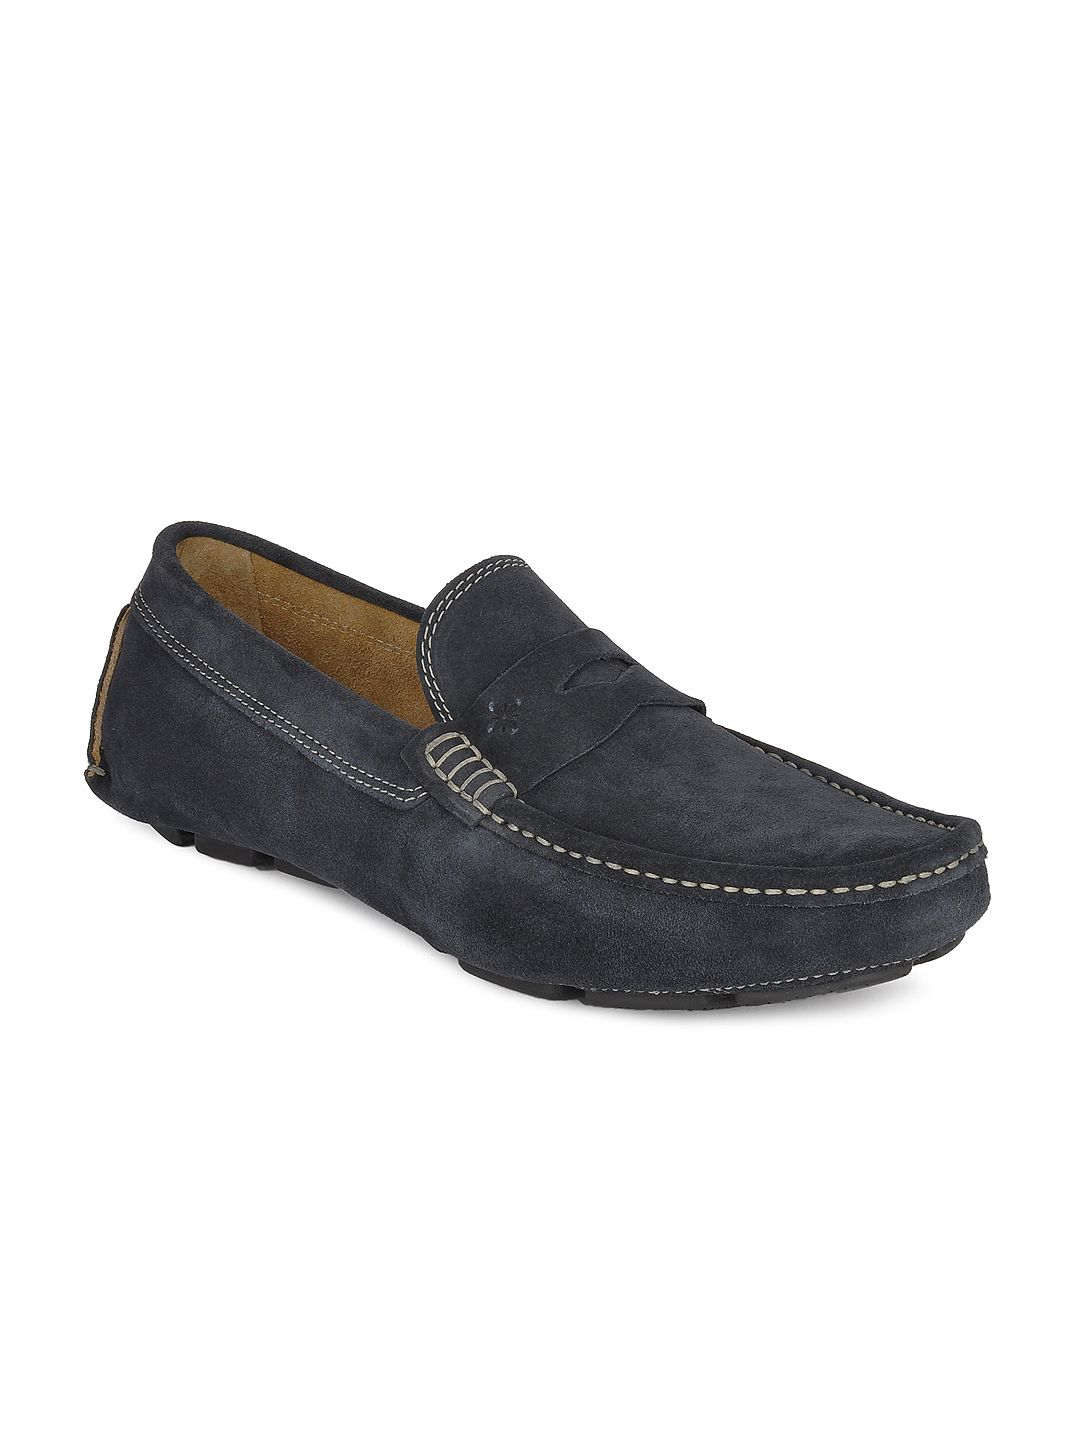 Buy Ruosh Casual Men Navy Driving Shoes - 632 - Footwear for Men - 143198